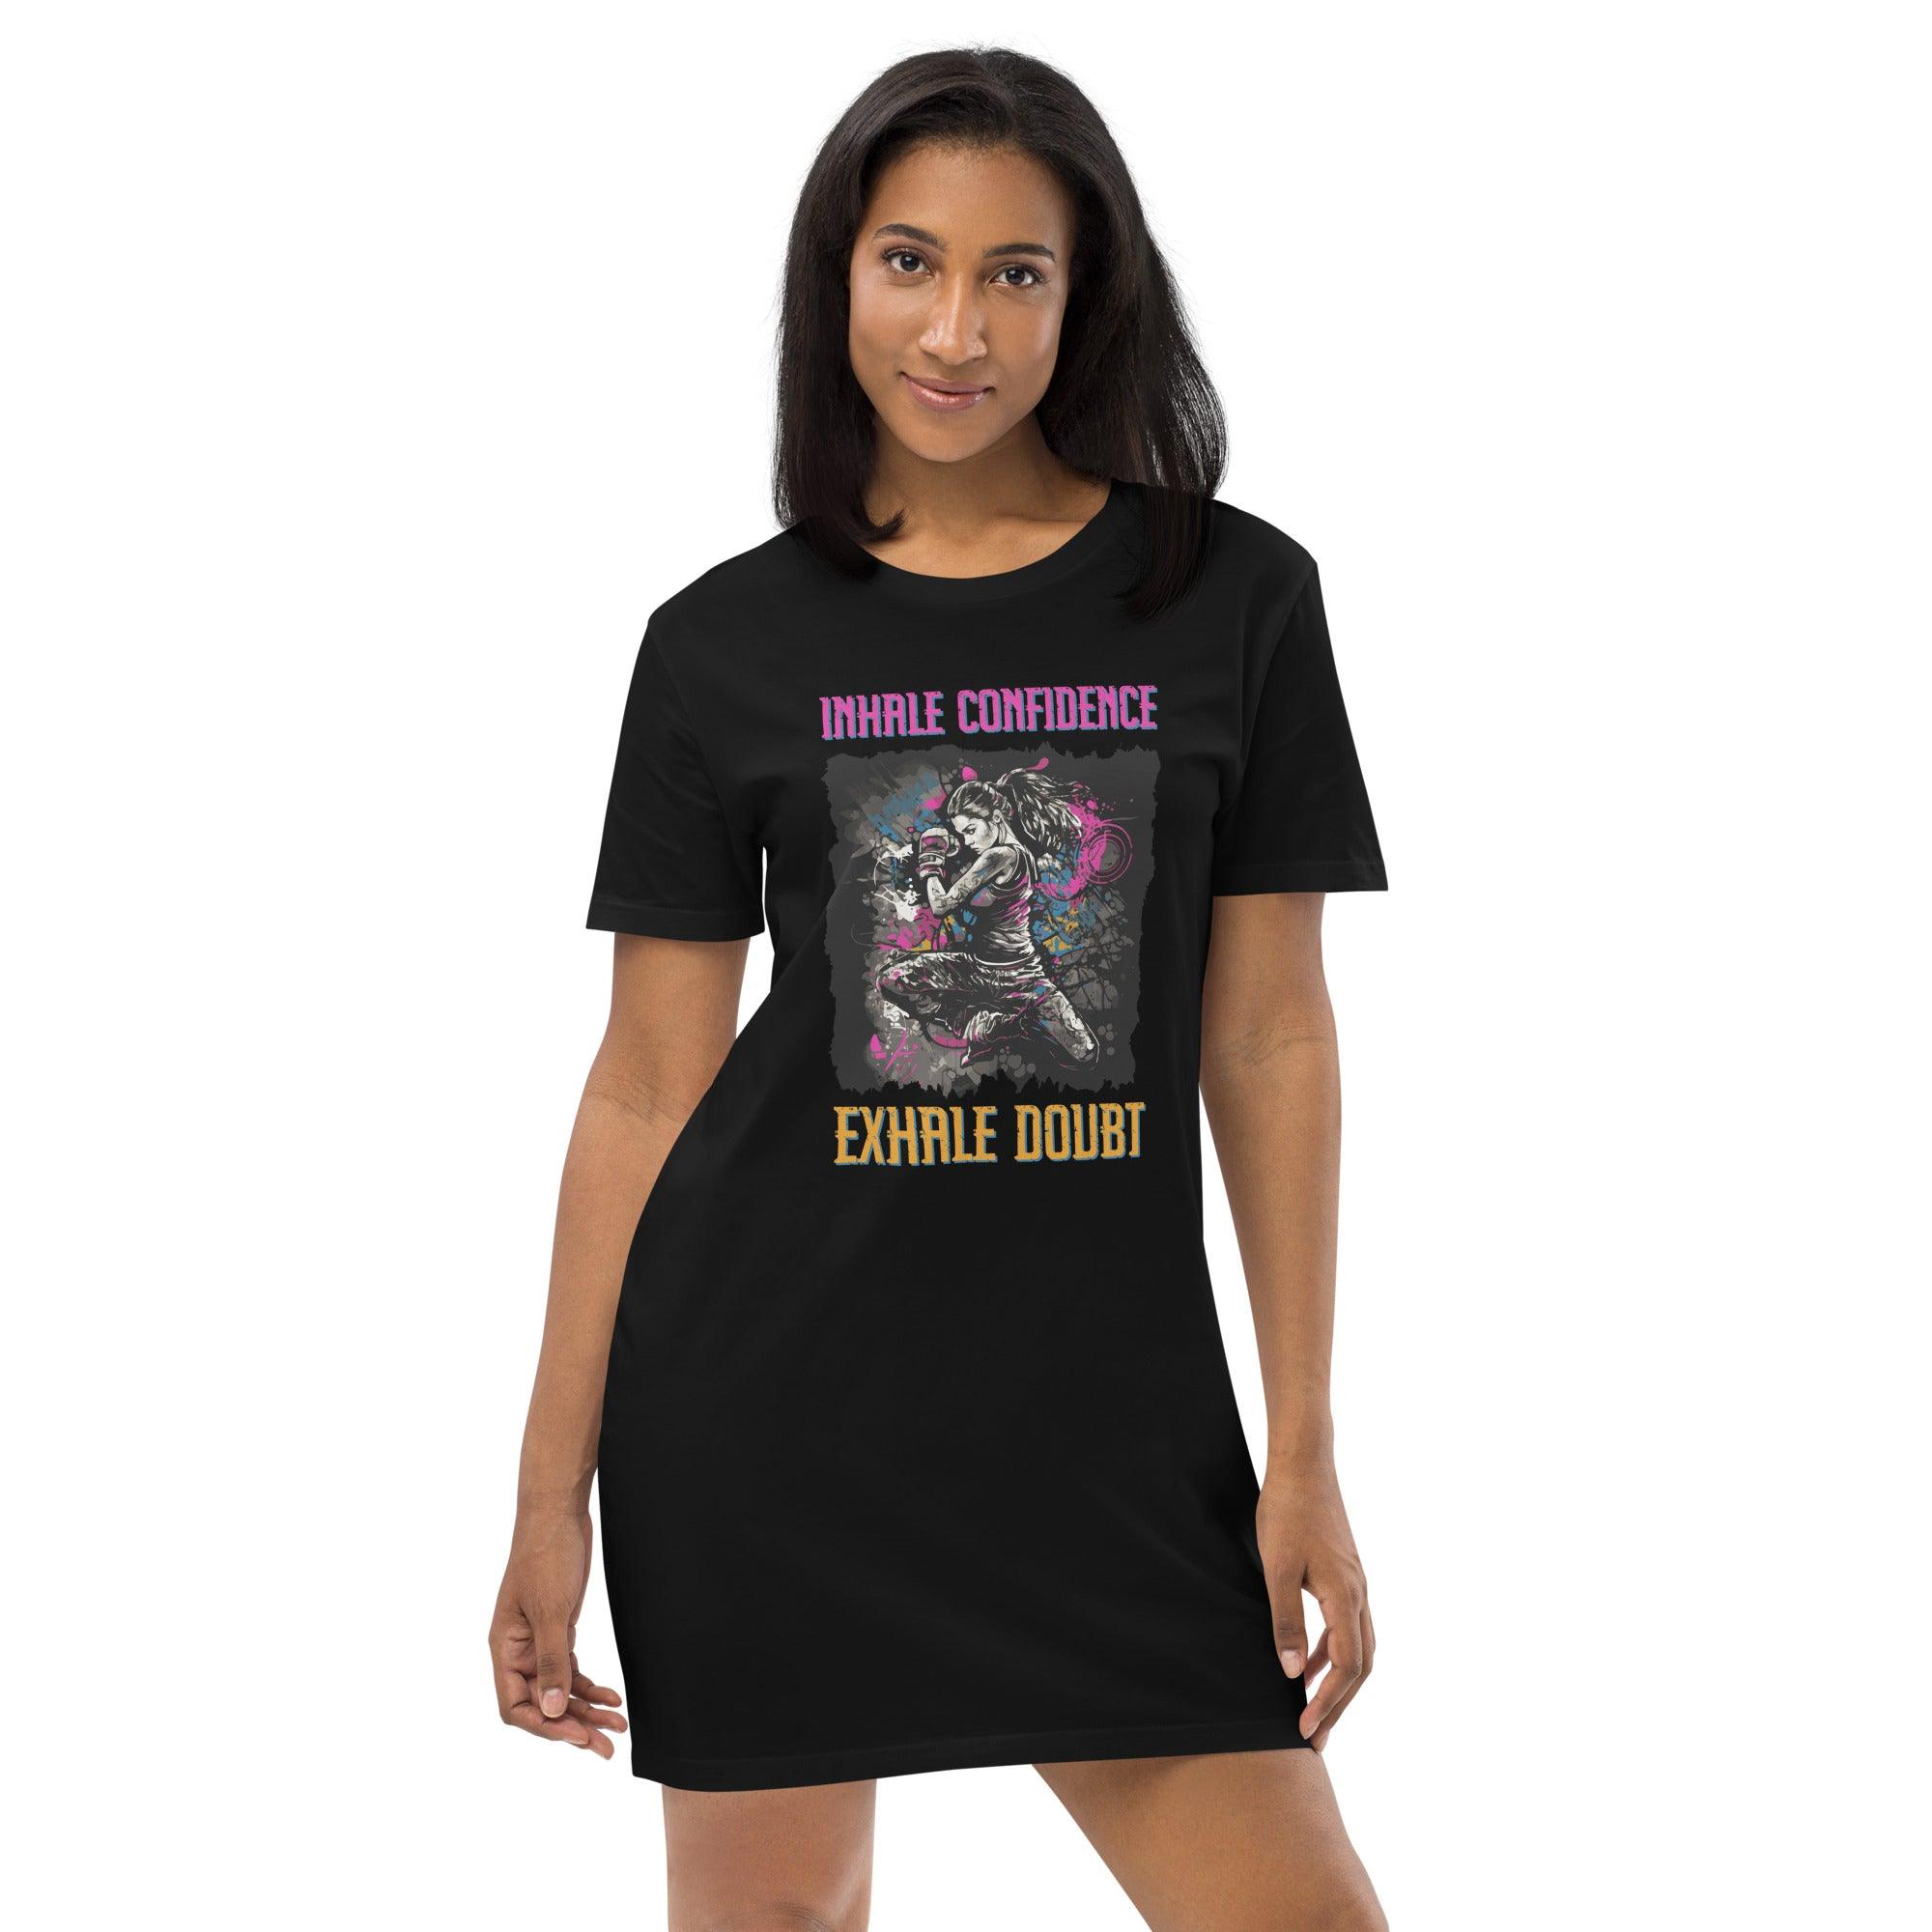 Inhale Confidence Exhale Doubt Organic Cotton T-shirt Dress - Beyond T-shirts